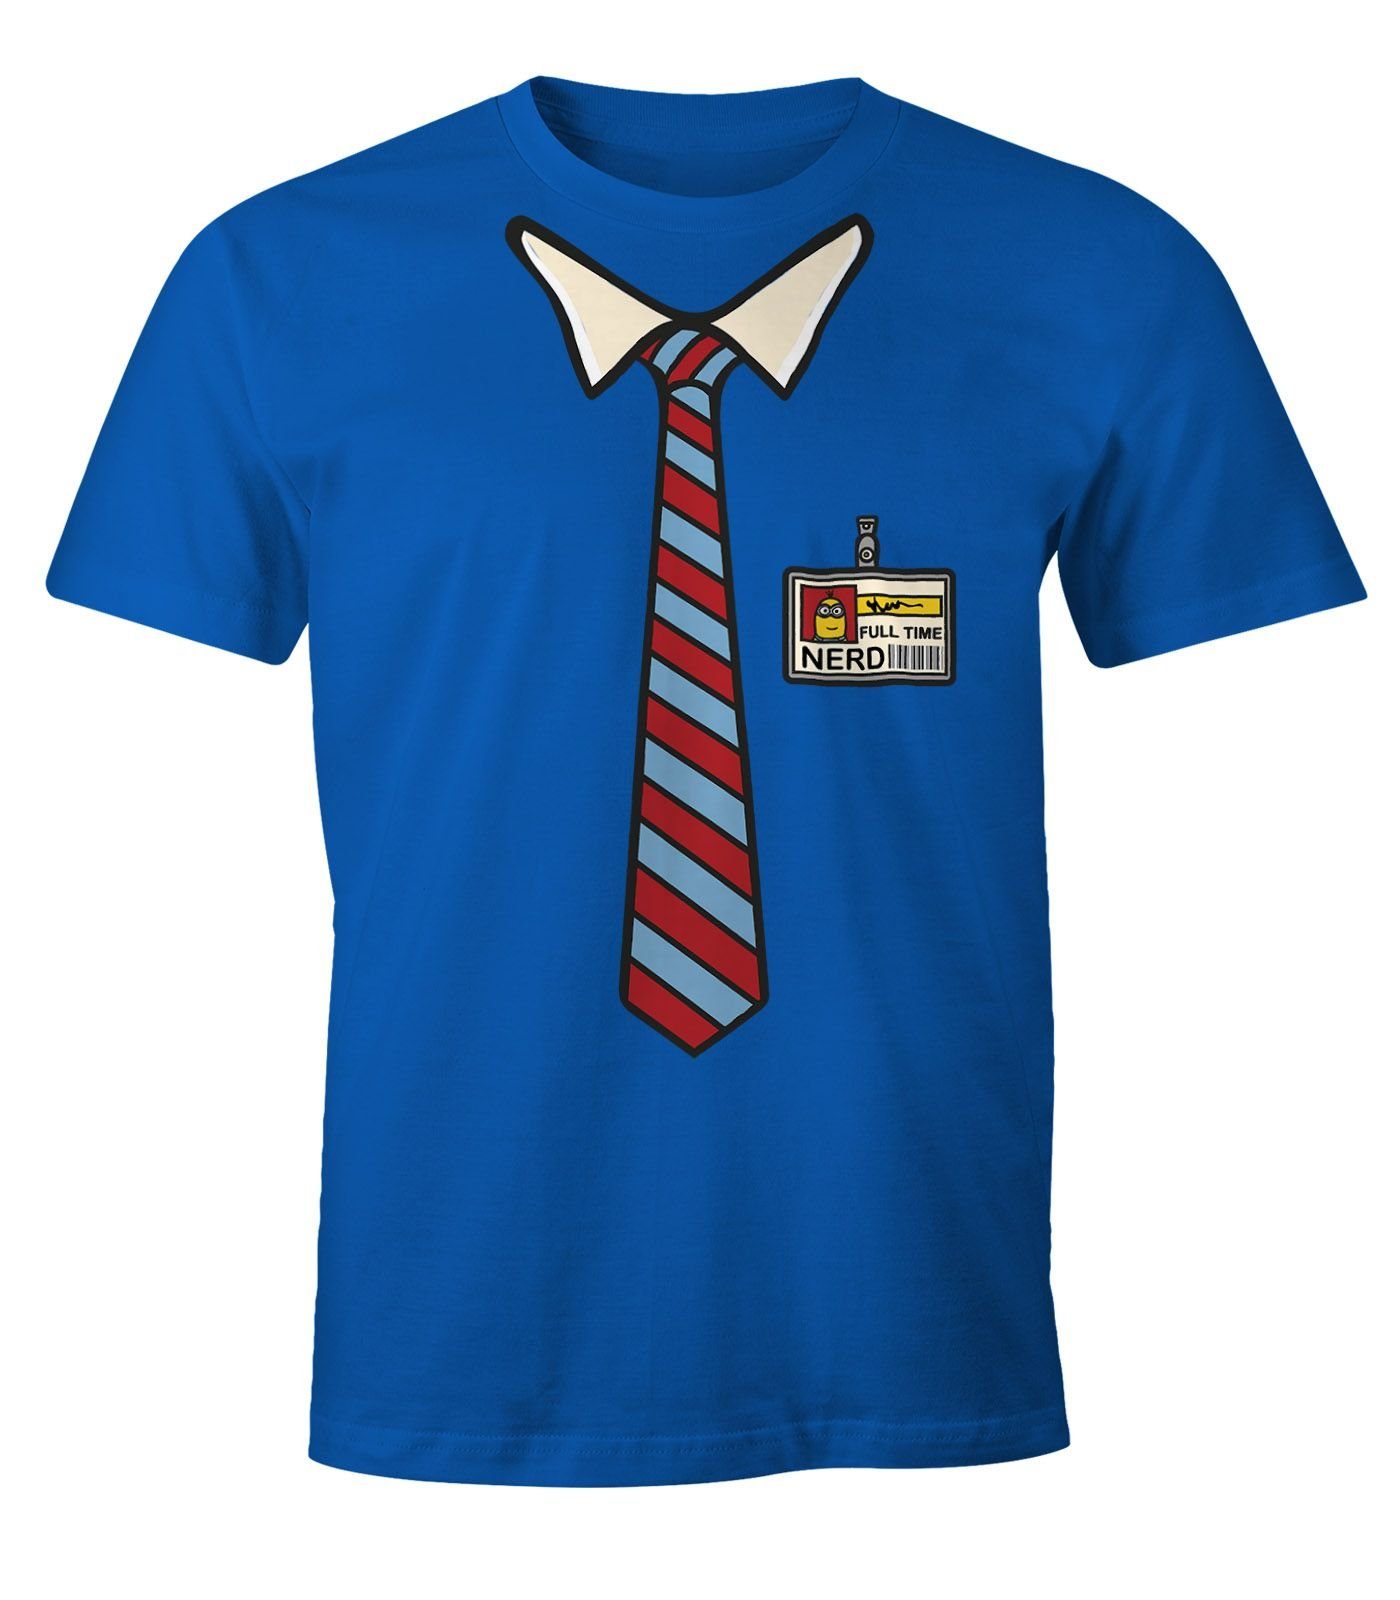 Full Geek blau Print Moonworks® Fun-Shirt Time mit T-Shirt Herren Nerd MoonWorks Print-Shirt